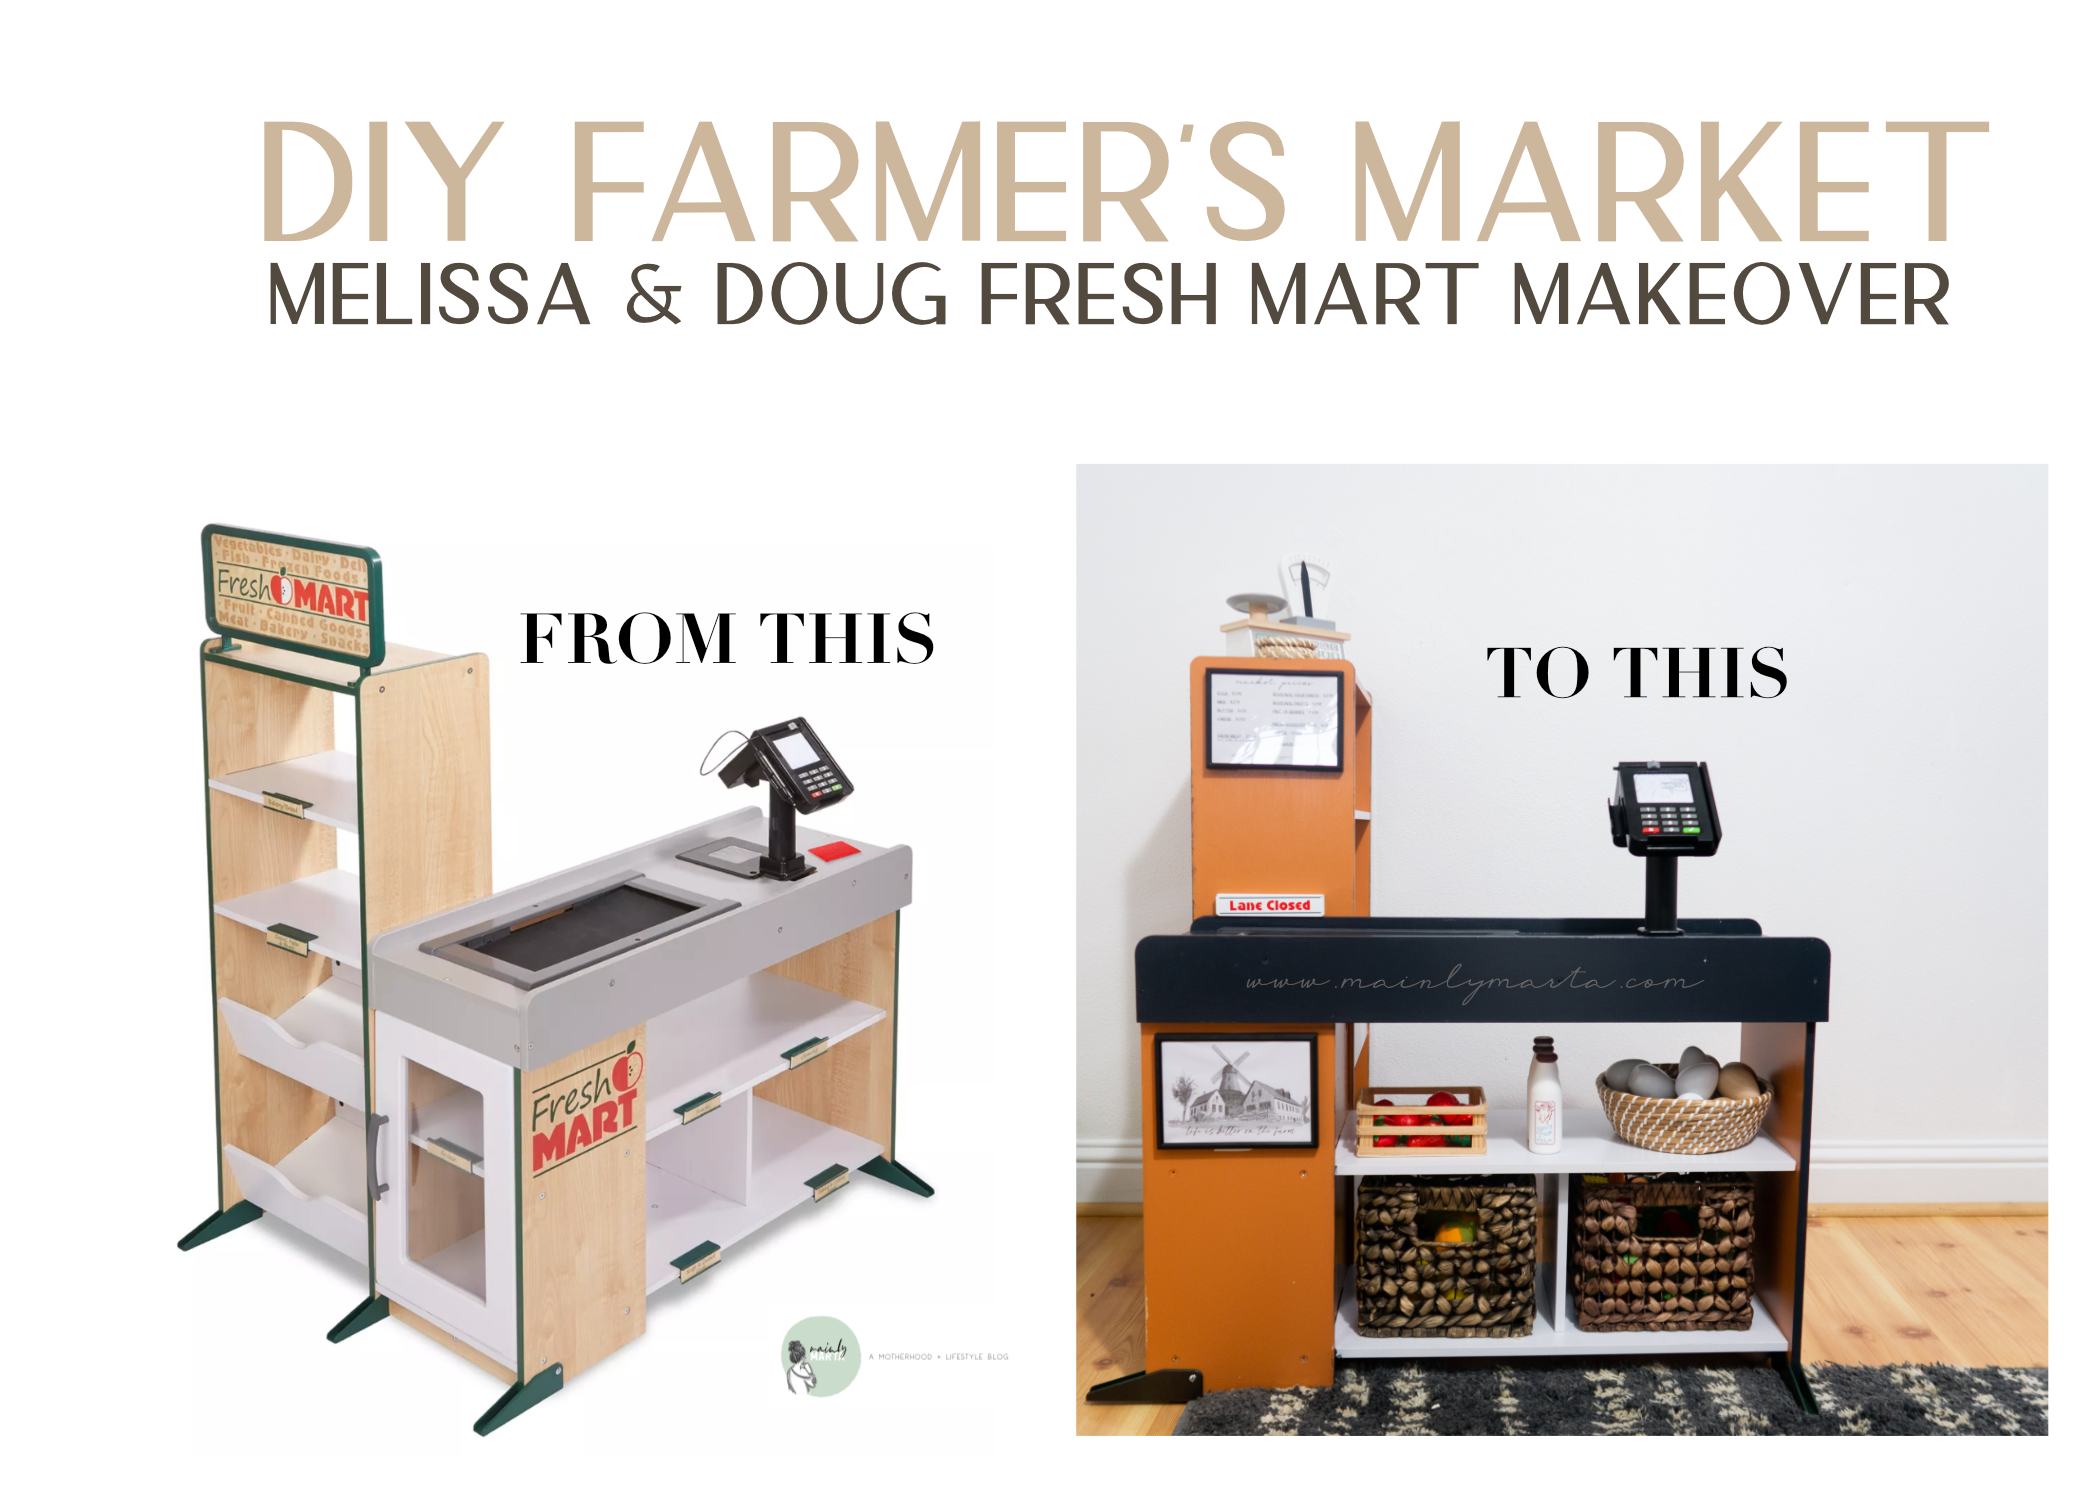 melissa and doug fresh market grocery